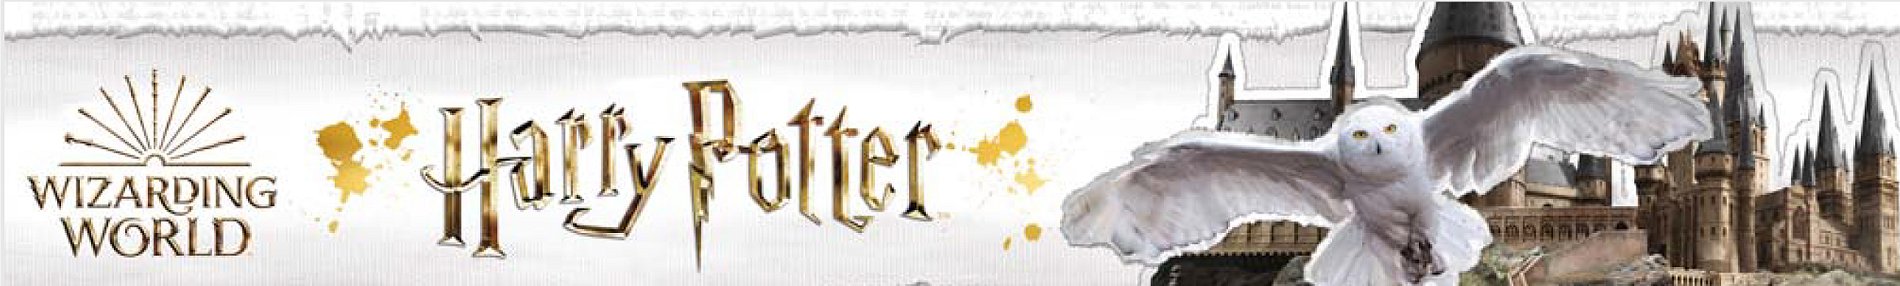 Acheter Harry Potter - Baguette Stylo Harry - Papeterie prix promo neuf et  occasion pas cher